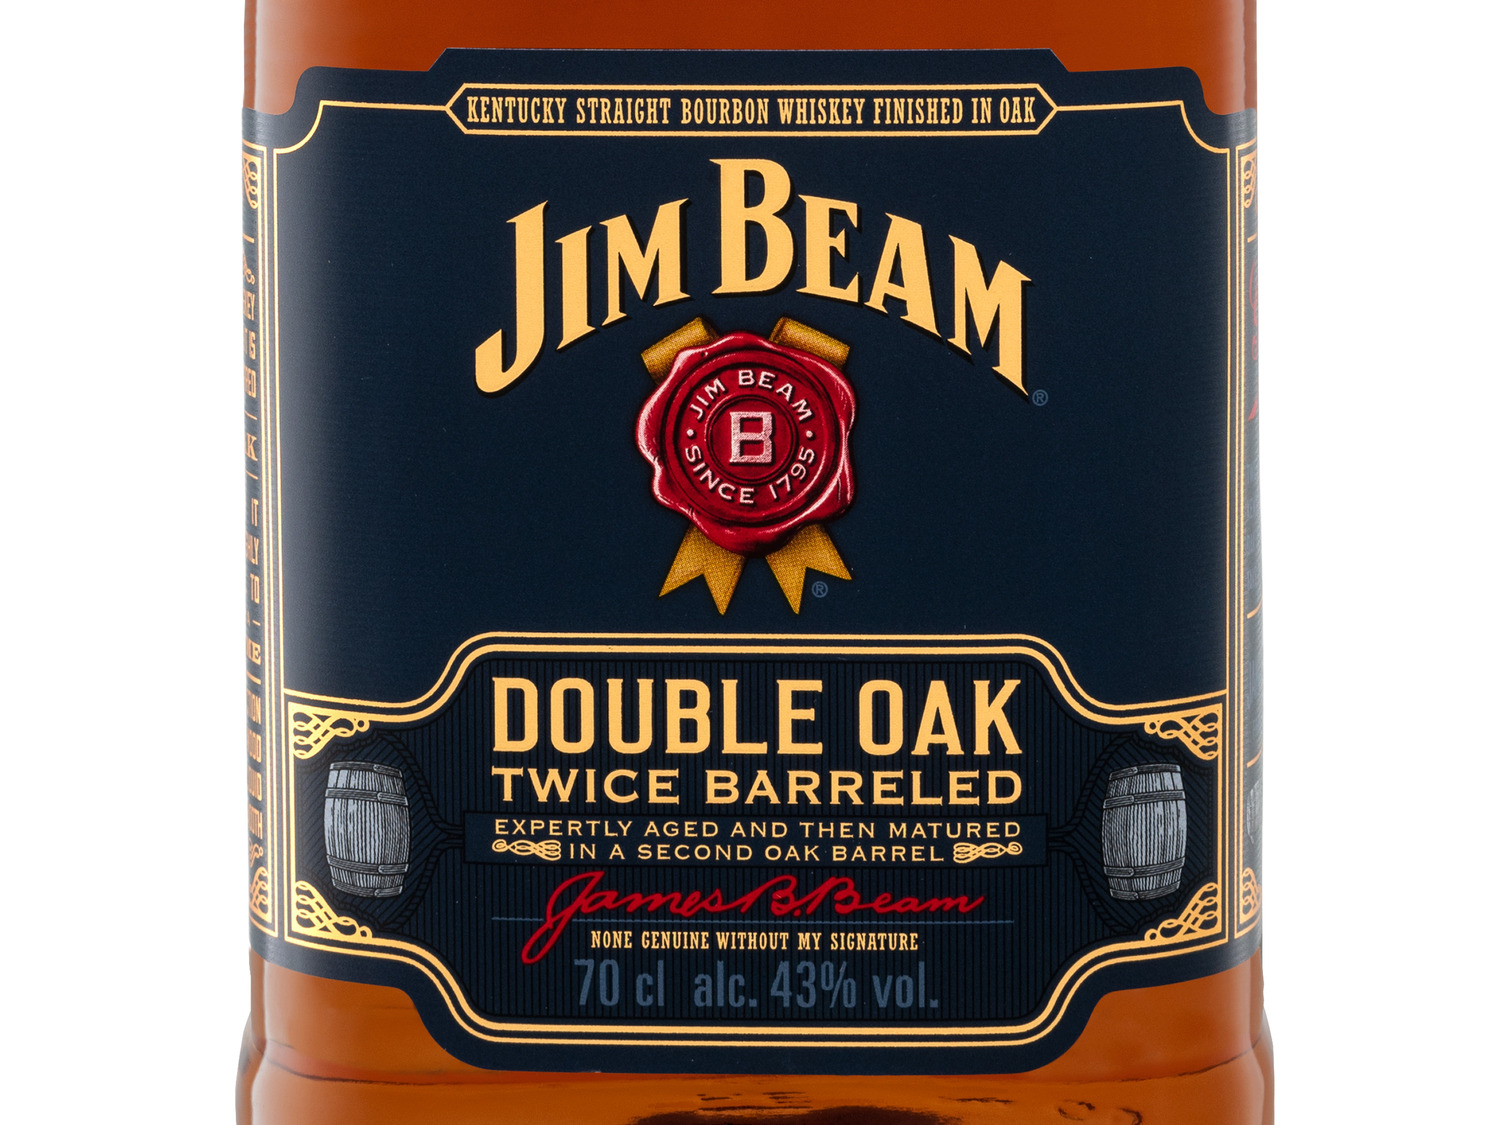 JIM BEAM Double Oak Barreled Twice Whiskey 43%… Bourbon